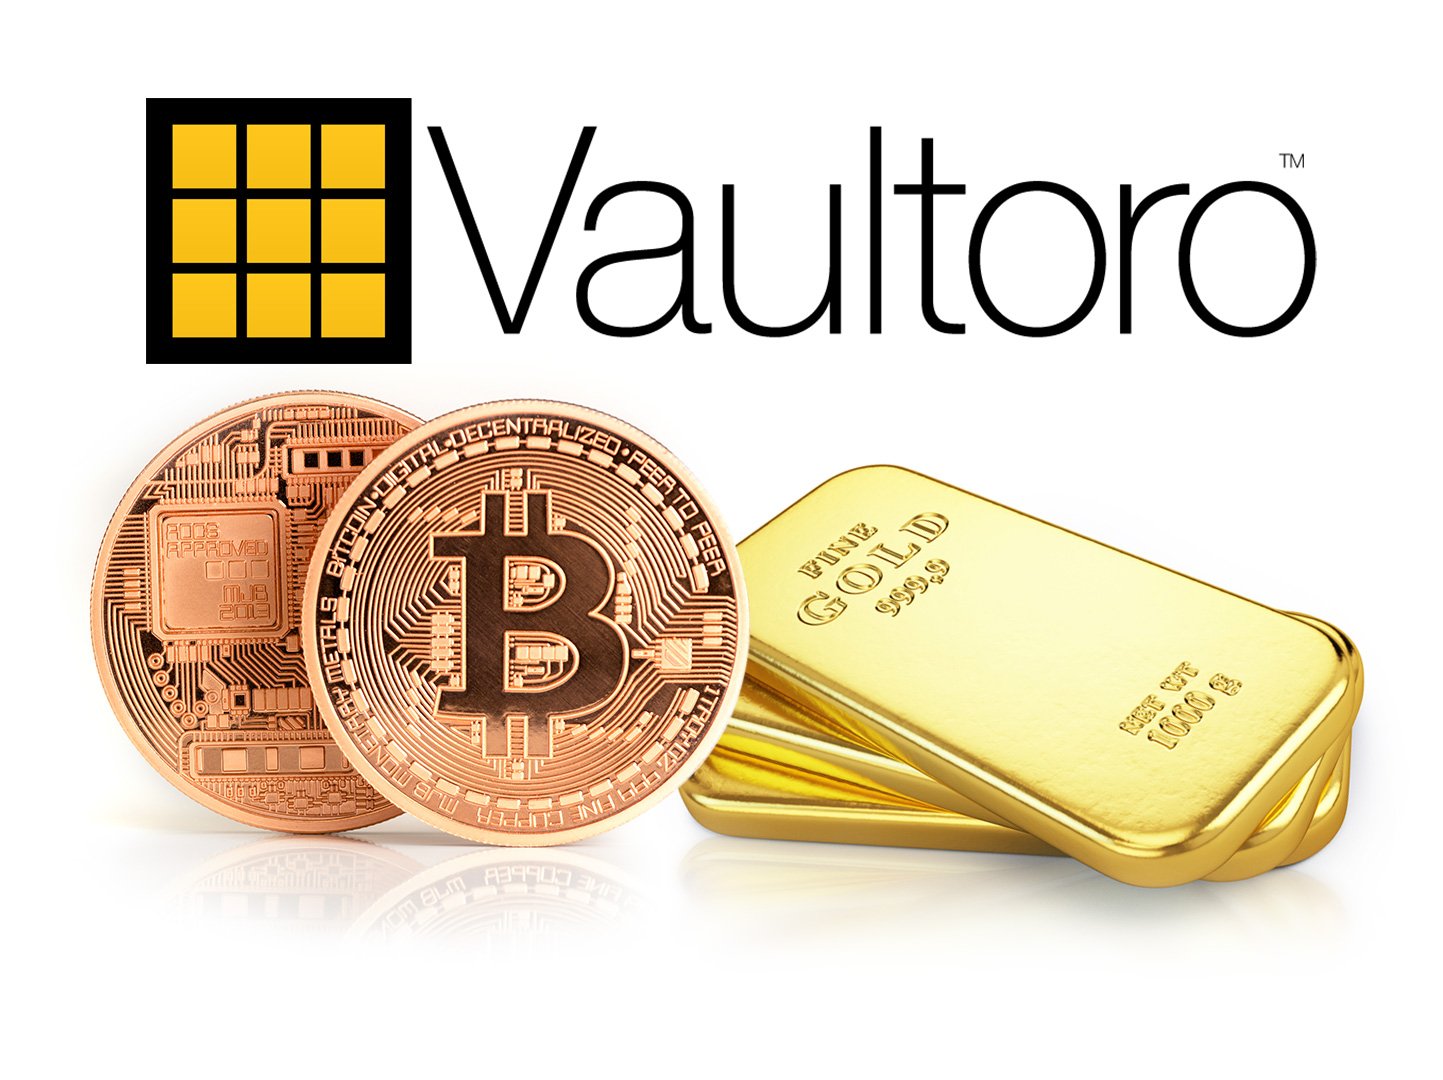 Vaultoro - The Bitcoin Gold Trading Platform